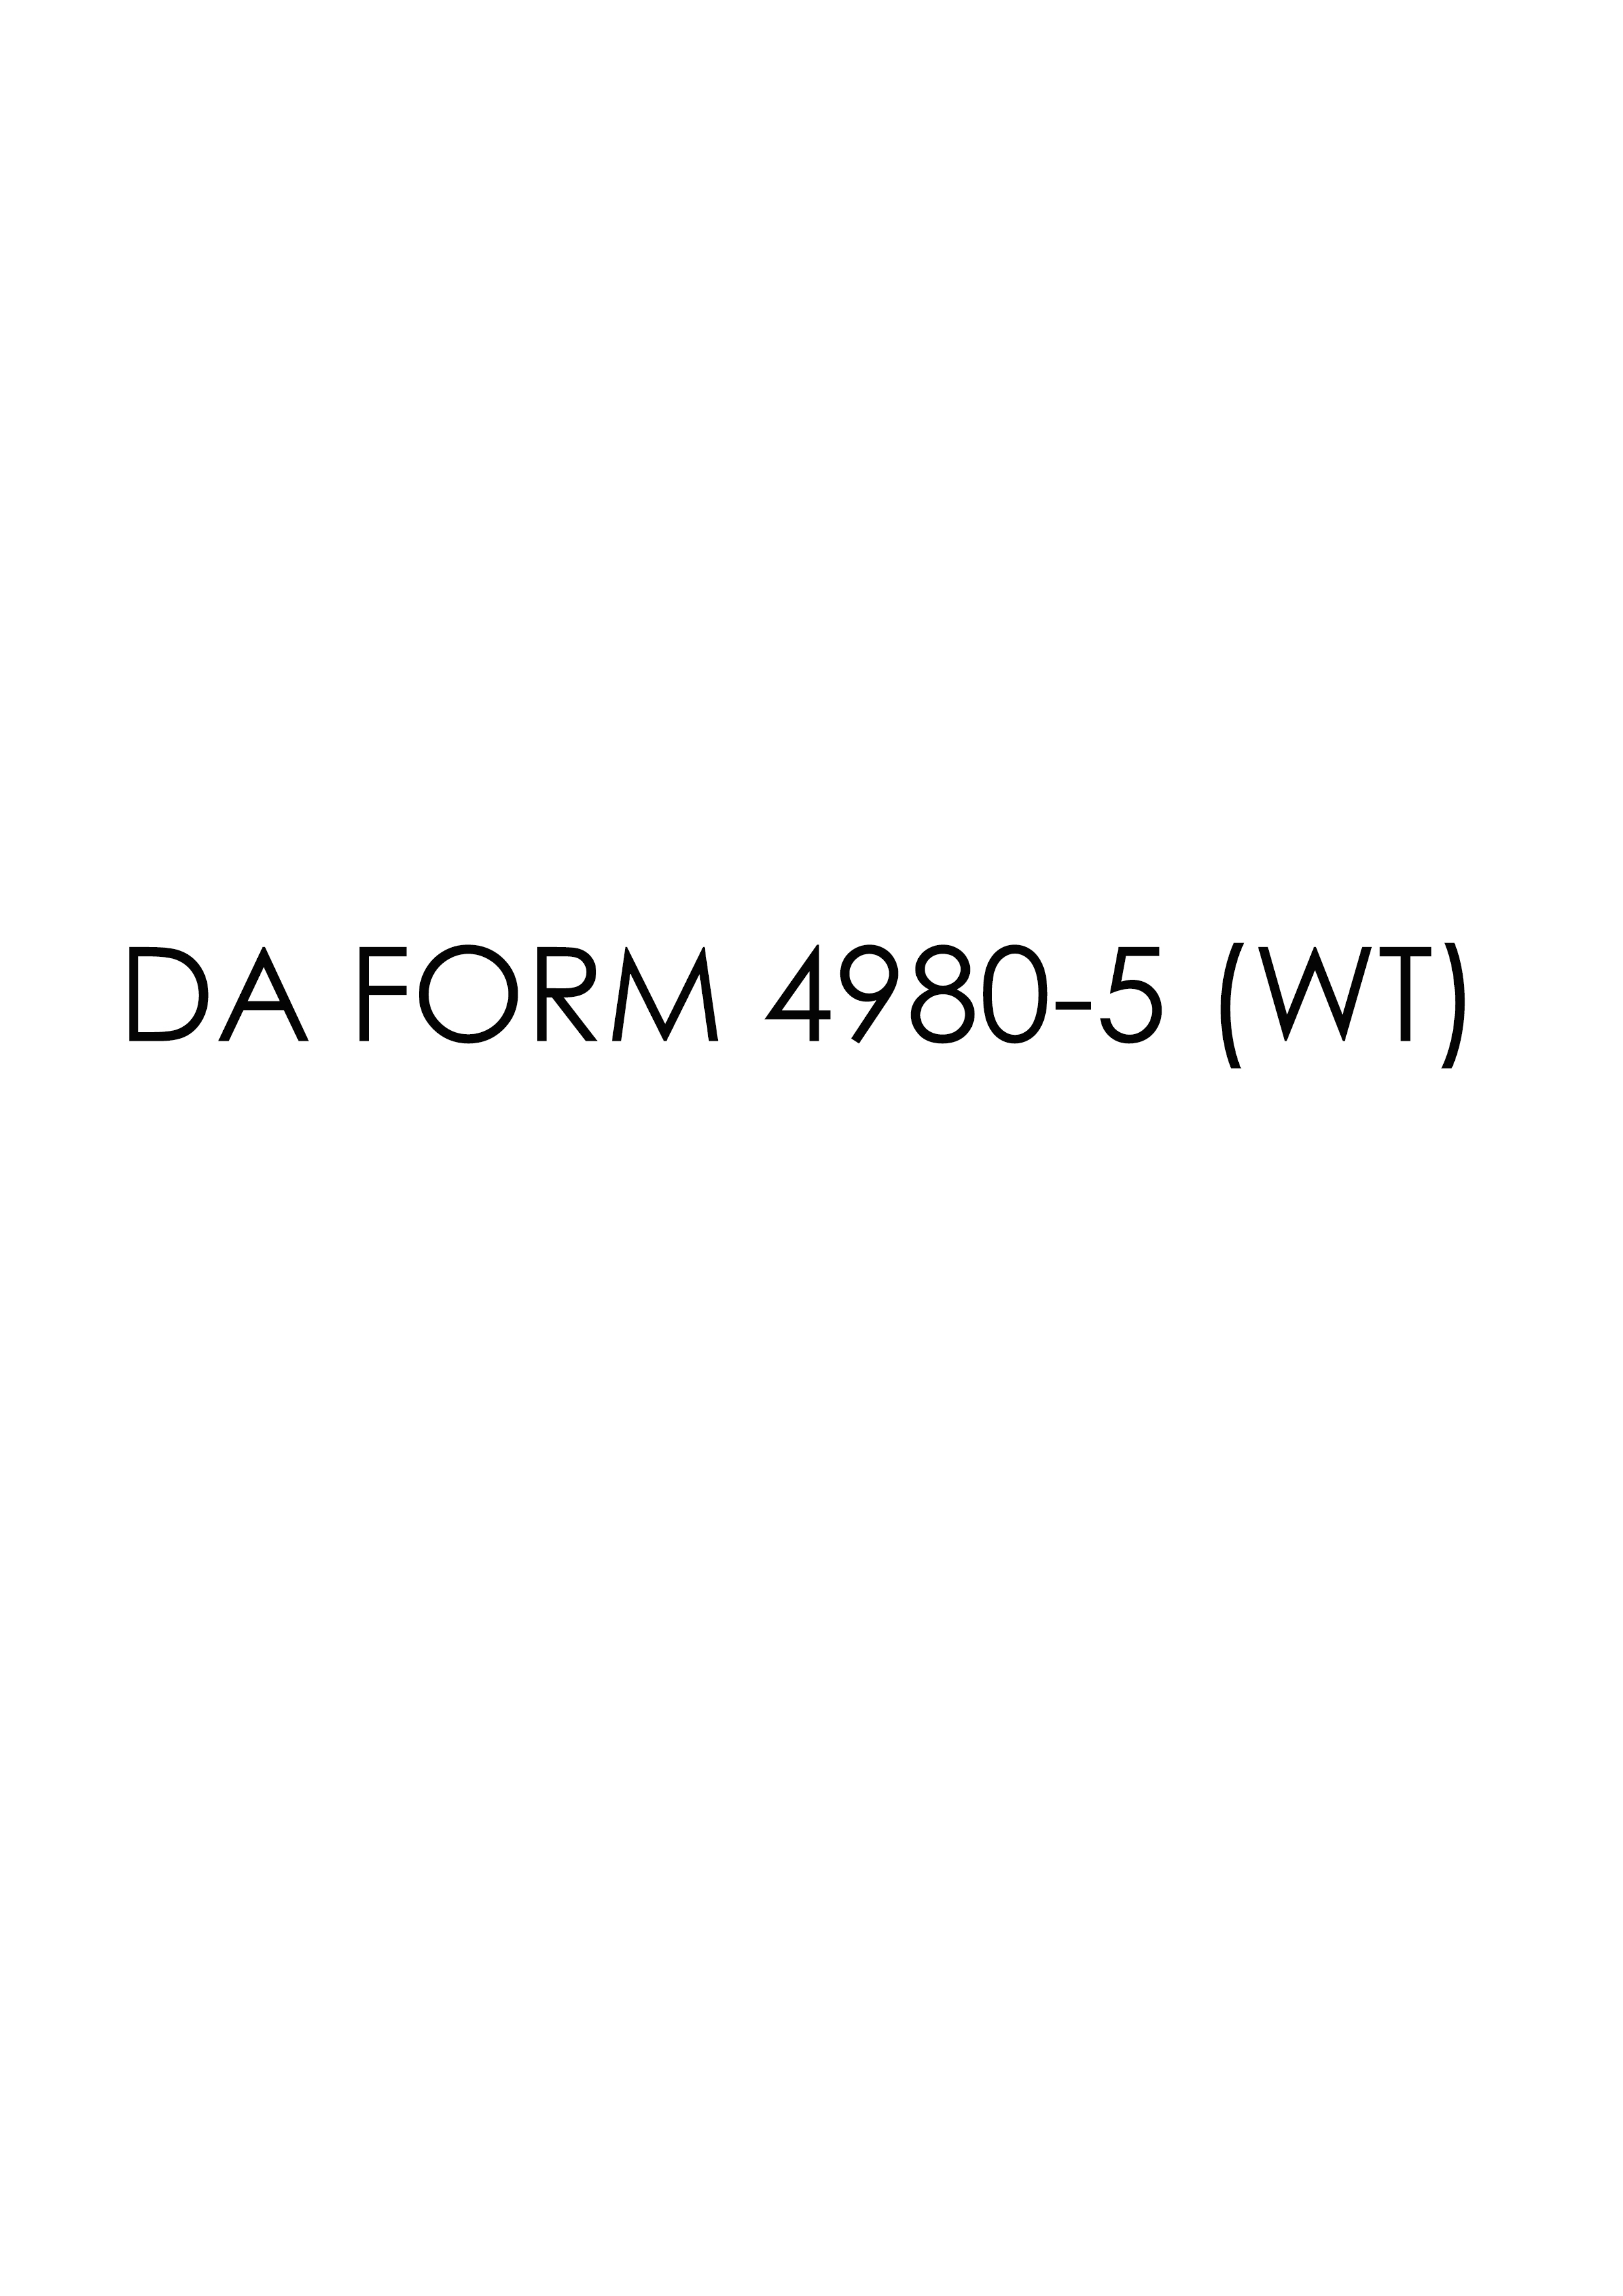 Download Fillable da Form 4980-5 (WT)